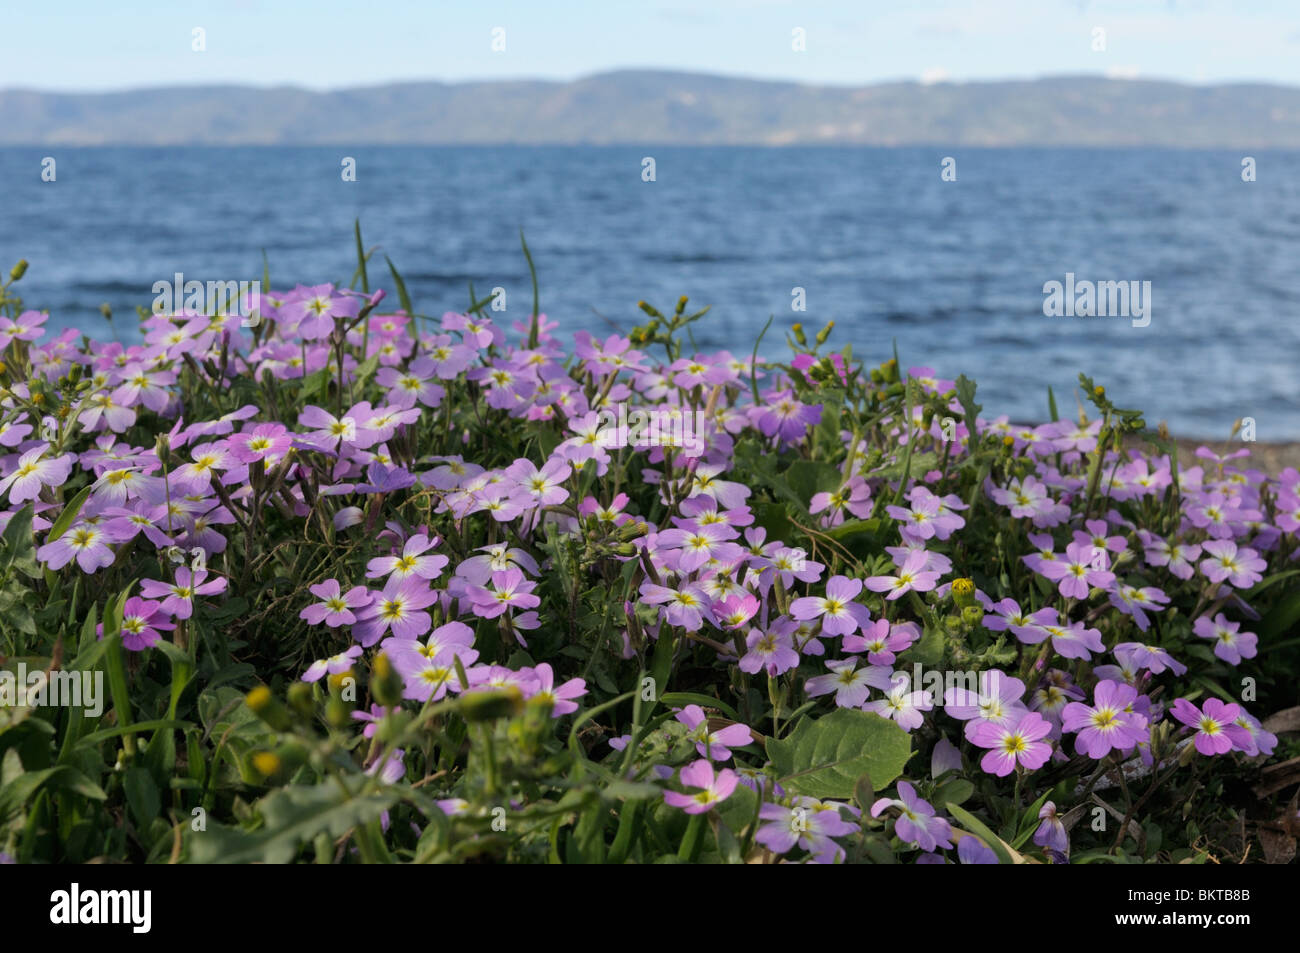 Flowering Sea Stock on the coast of the Aegean Sea Stock Photo